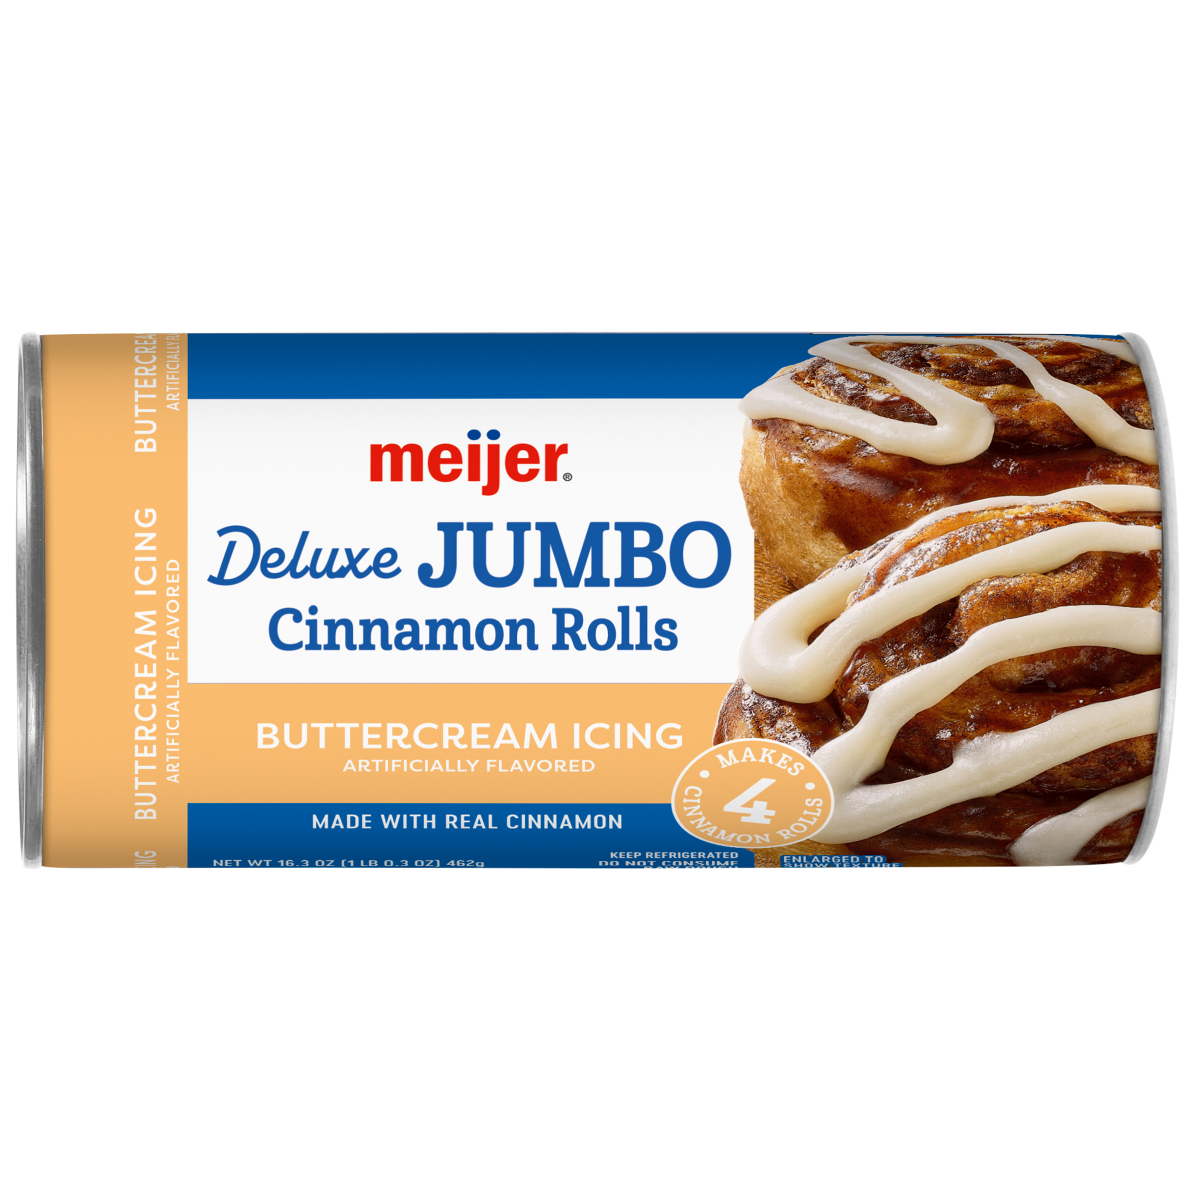 slide 1 of 2, Meijer Deluxe Jumbo Cinnamon Rolls with Buttercream Icing, 16.3 oz